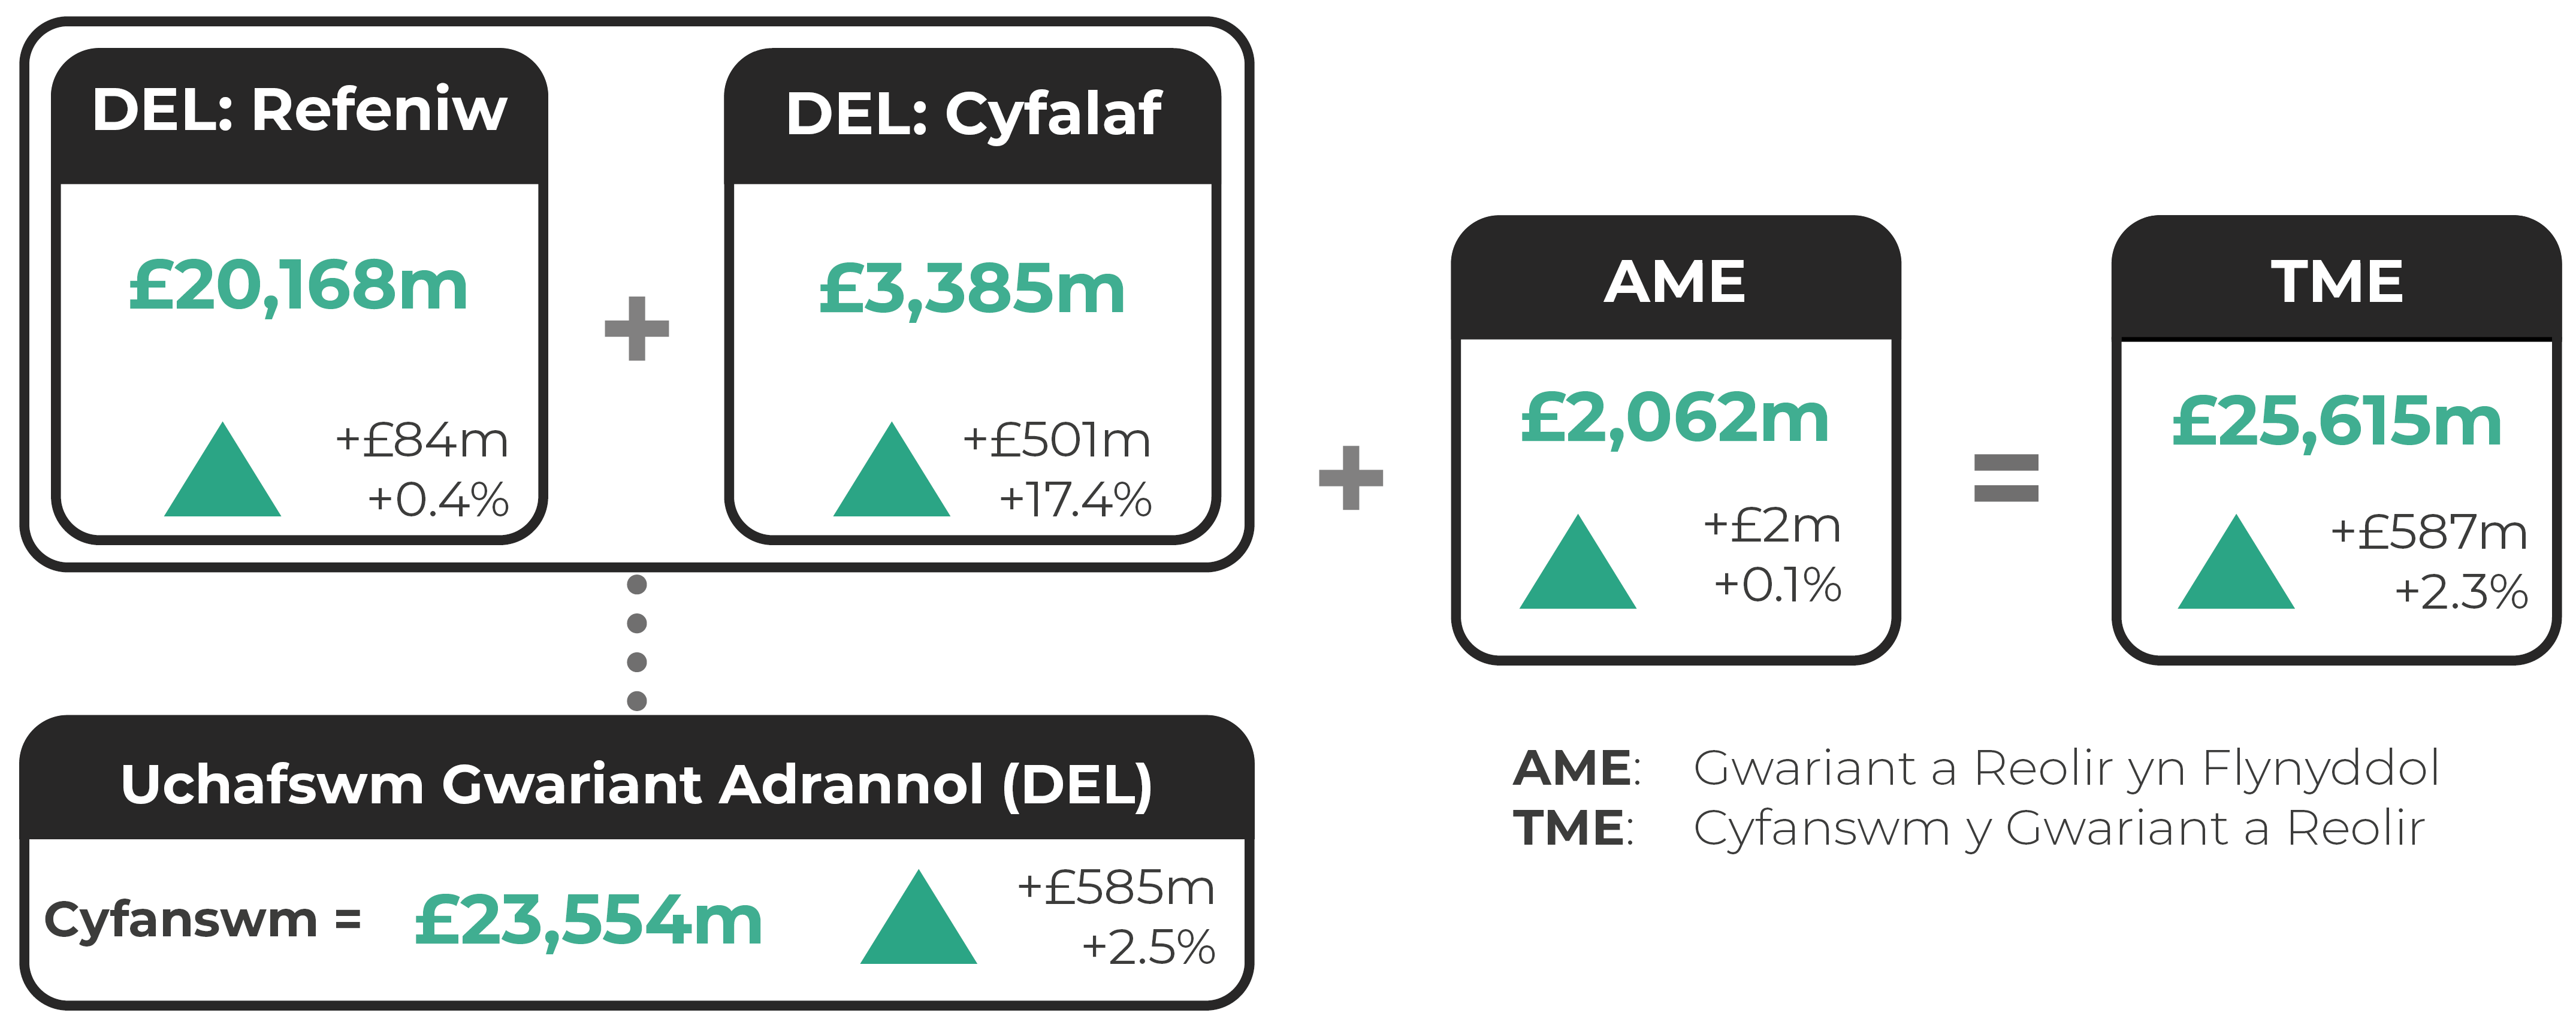 Revenue Departmental Expenditure Limit (DEL): £20,168m (up by £84m or 0.4%). Capital DEL: £3,385m (up by £501m or 17.4%). Total DEL: £23,554m (up by £585m or 2.5%). Annually Managed Expenditure (AME): £2,062m (up by £2m or 0.1%). Total Managed Expenditure (TME): £25,615m (up by £587m or 2.3%).